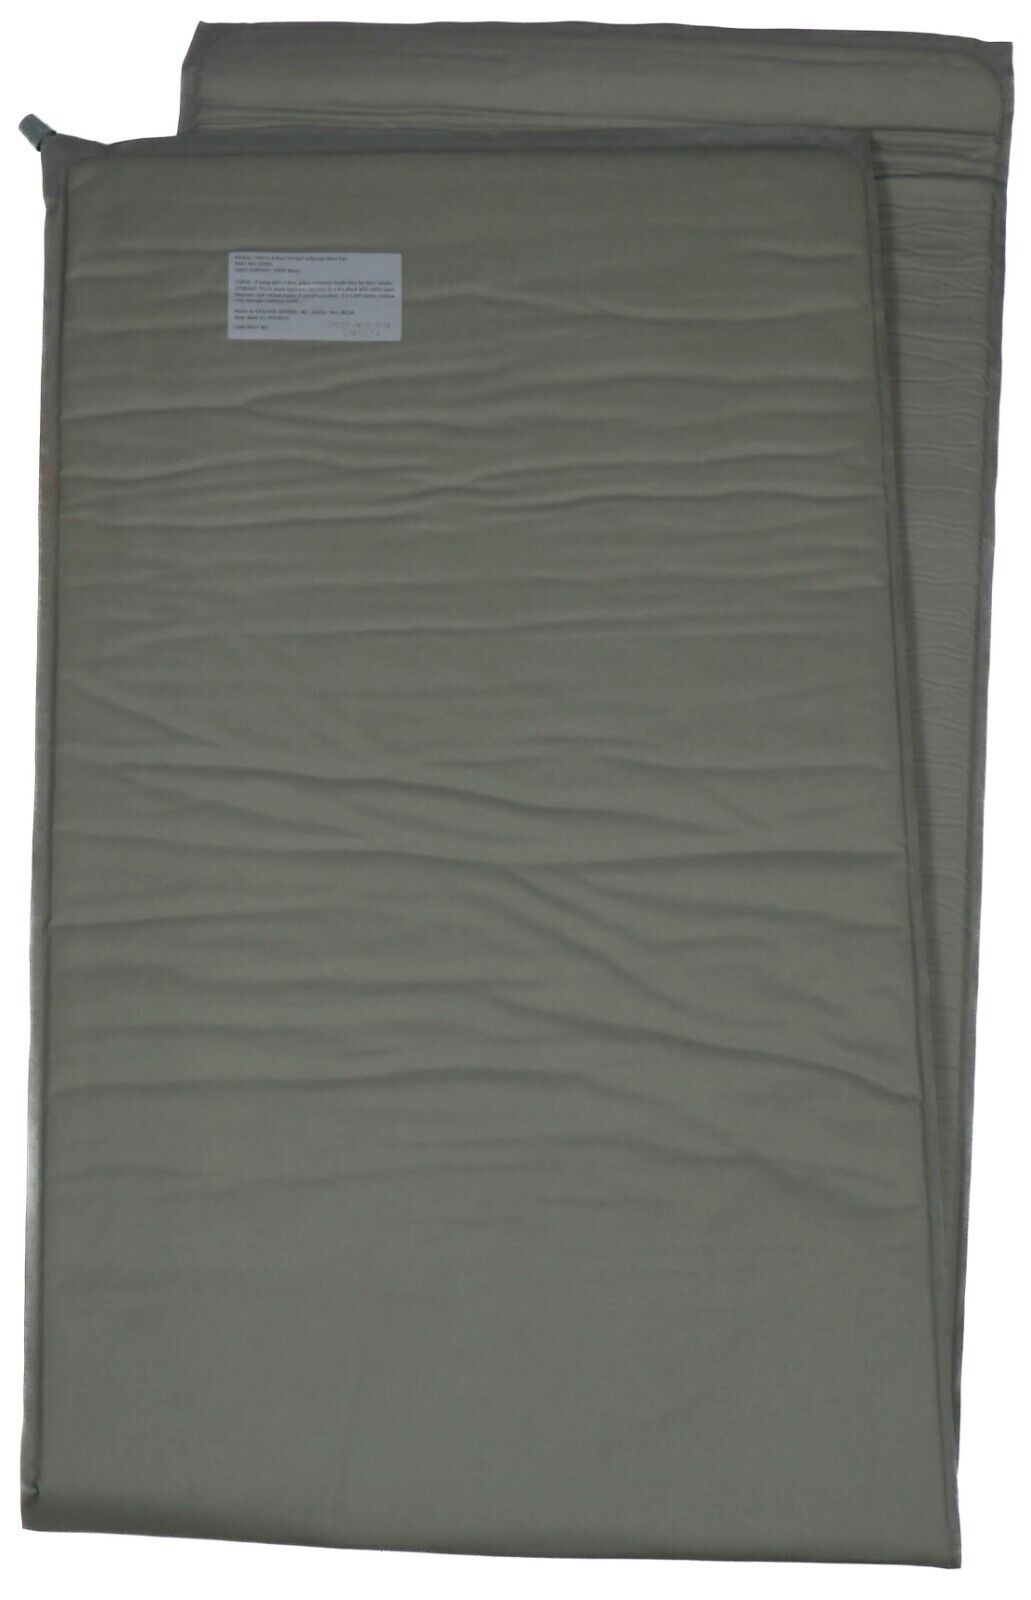 Damaged Therm-A-Rest Self-Inflating Sleeping Pad Mattress Army Sleep Mat